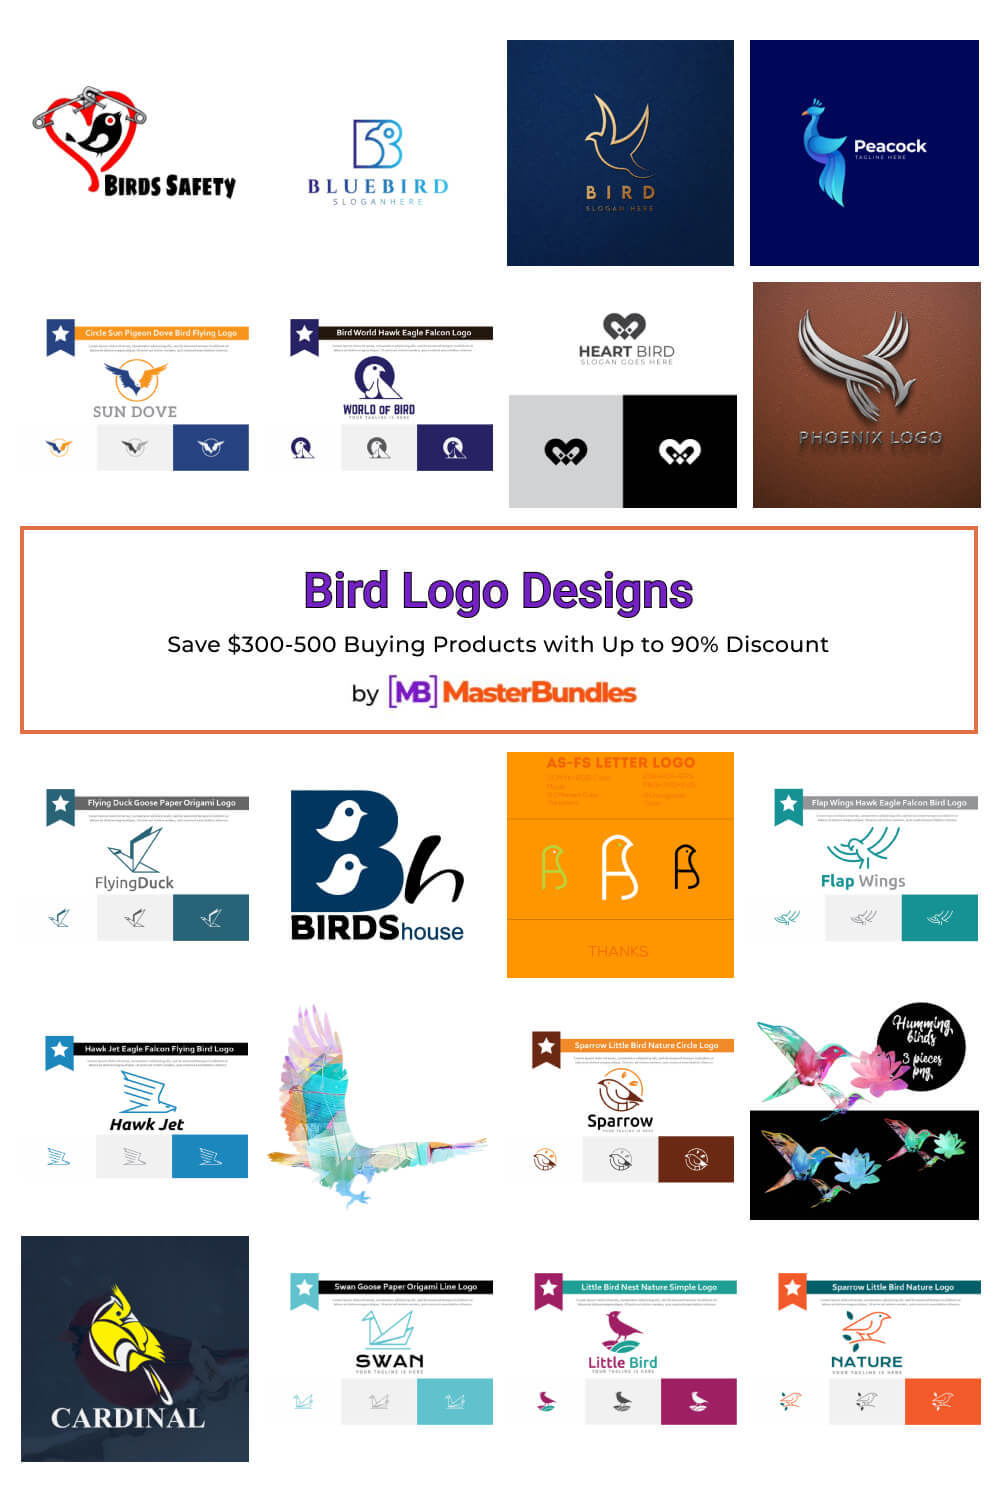 bird logo designs pinterest image.